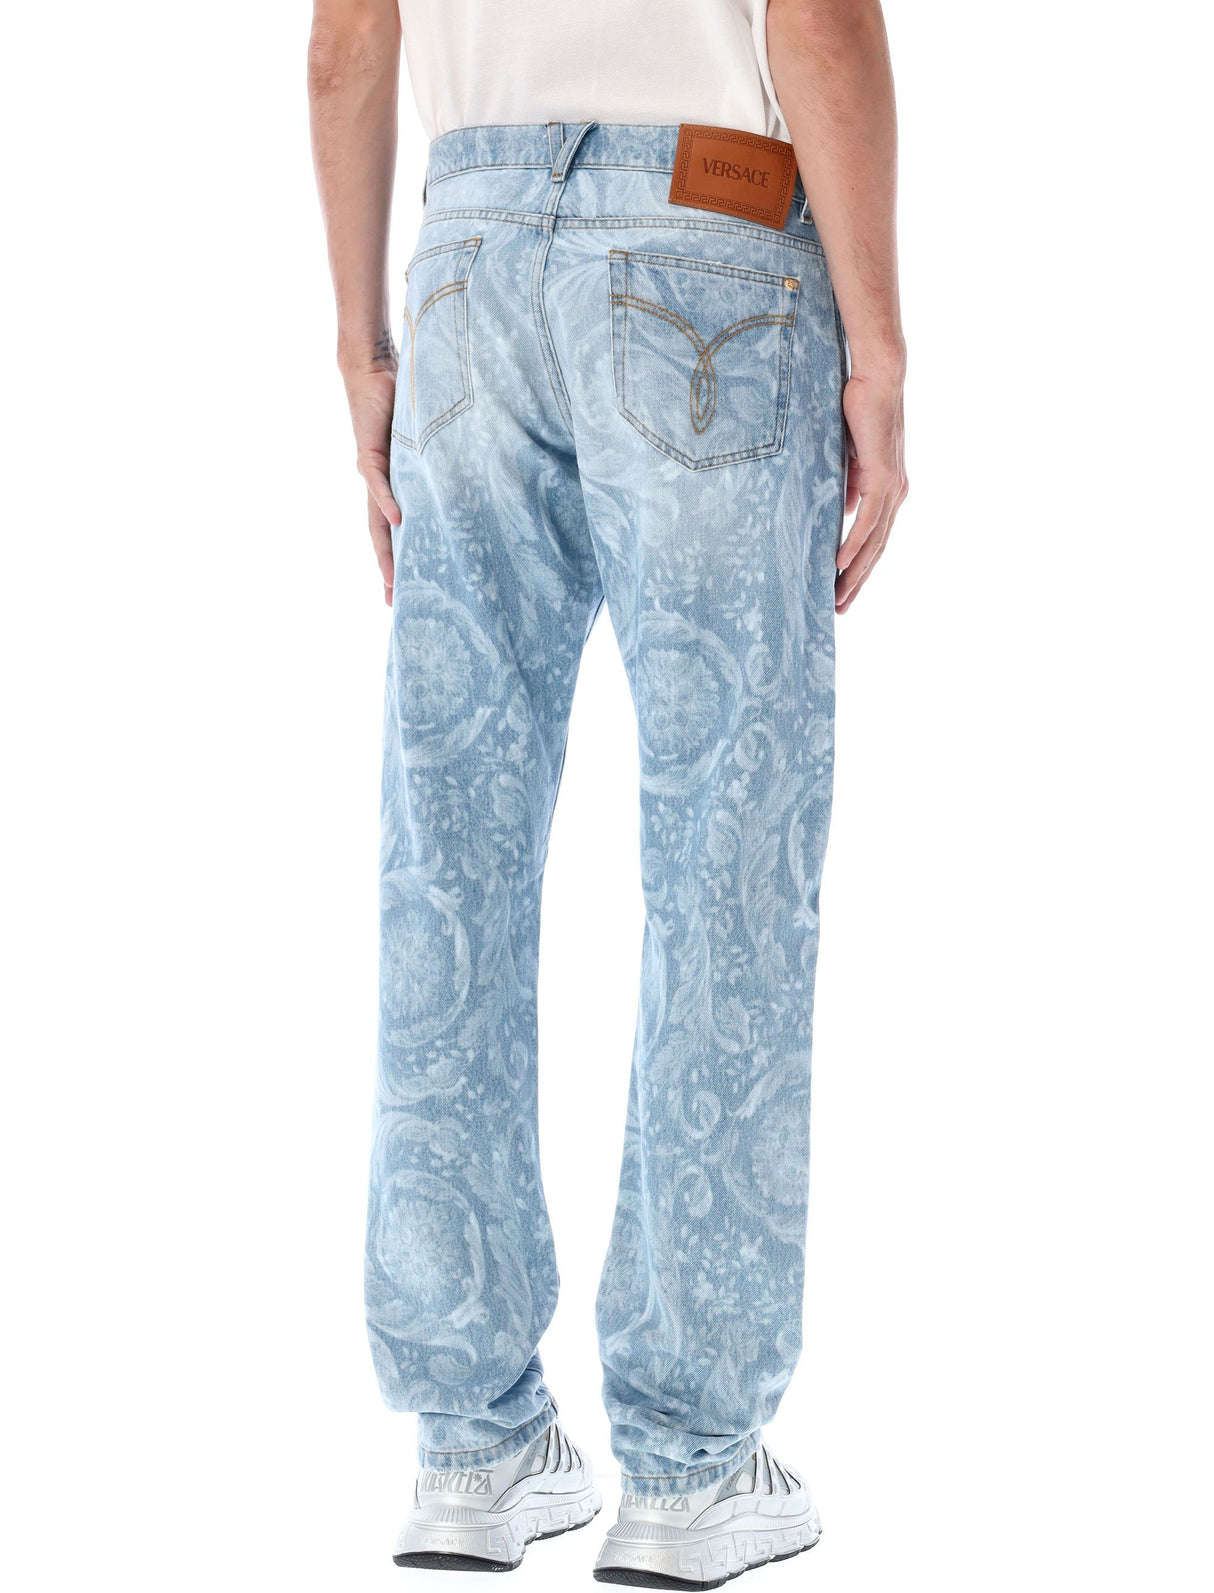 Baroque All-over Patterned Jeans for Men